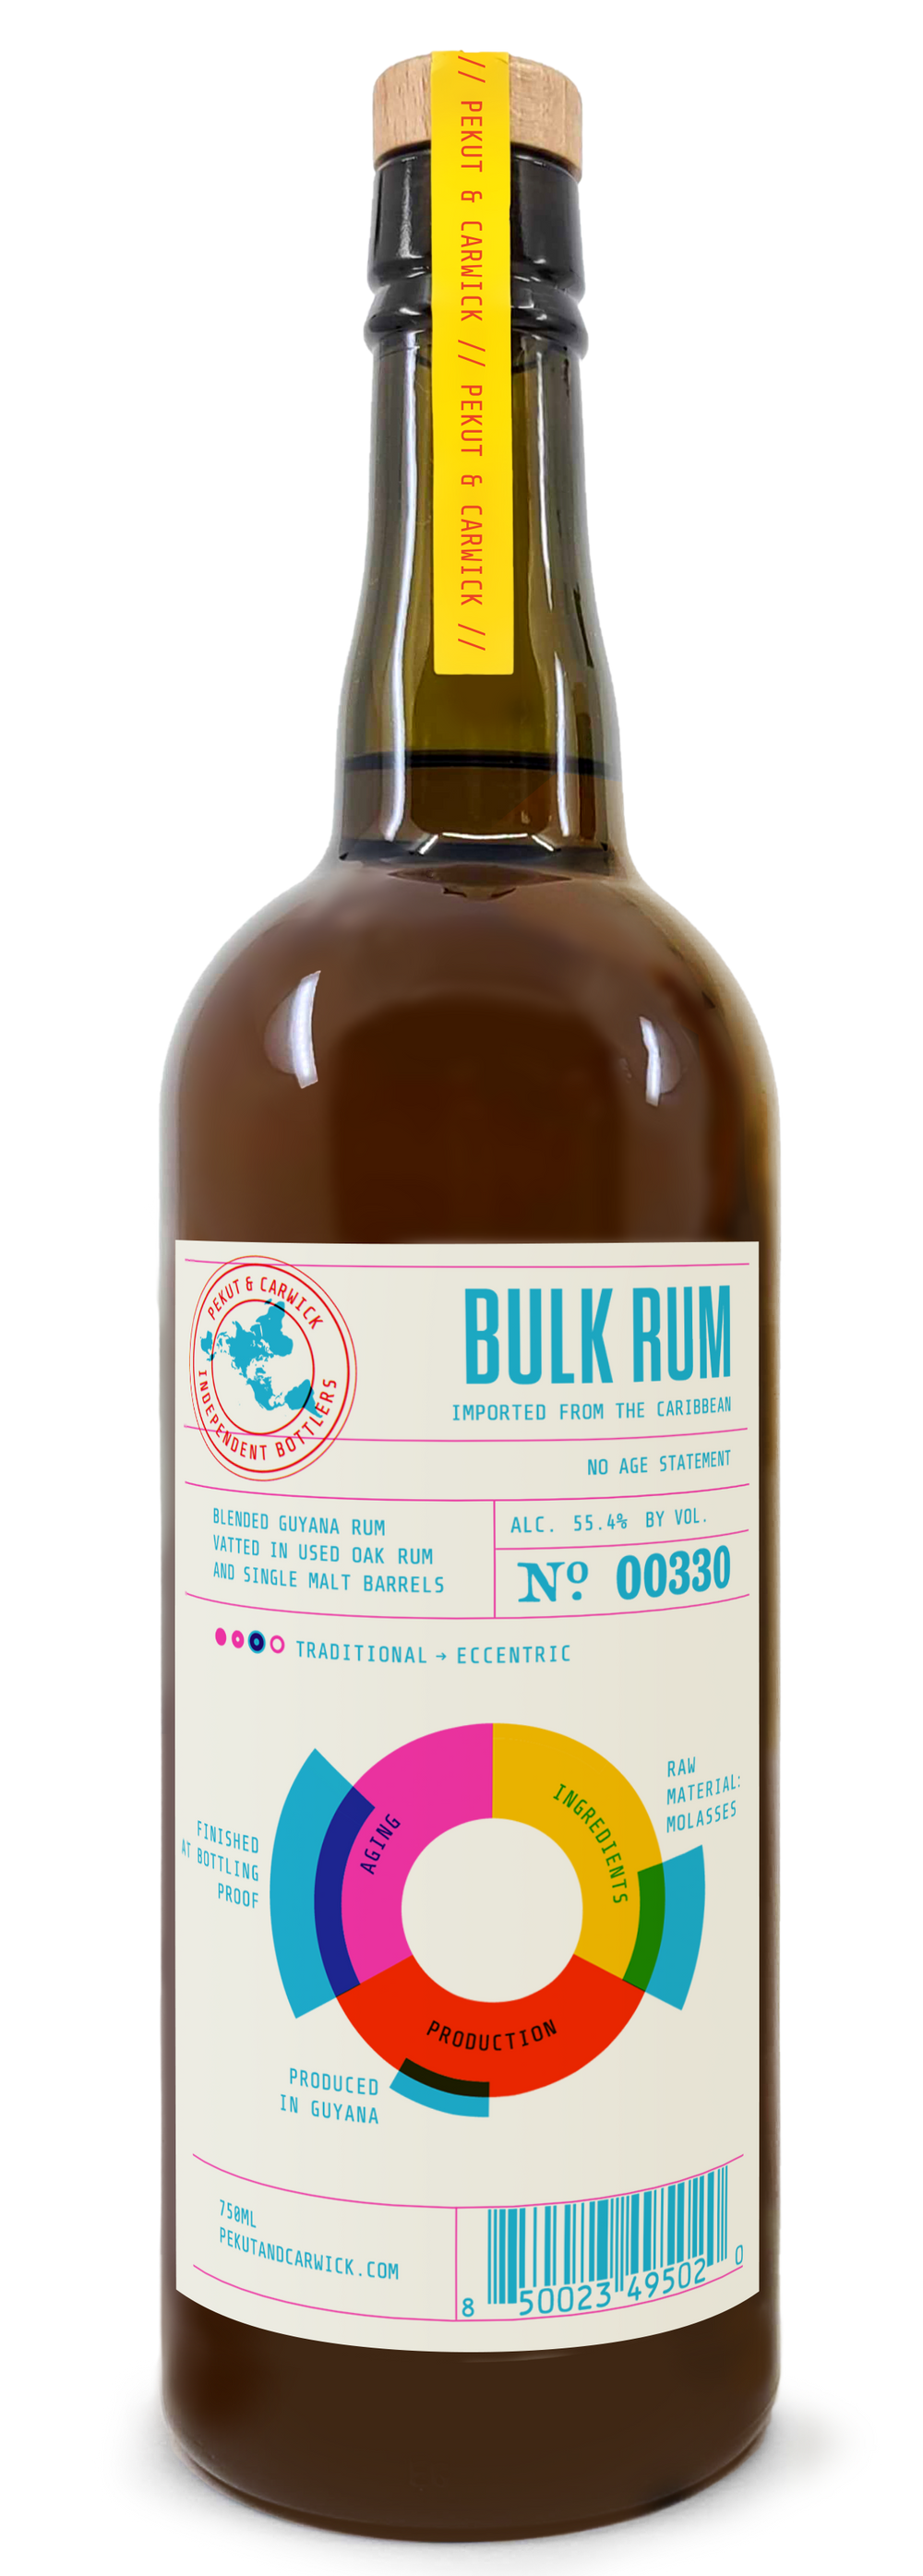 Pekut & Carwick Bulk Guyana Rum